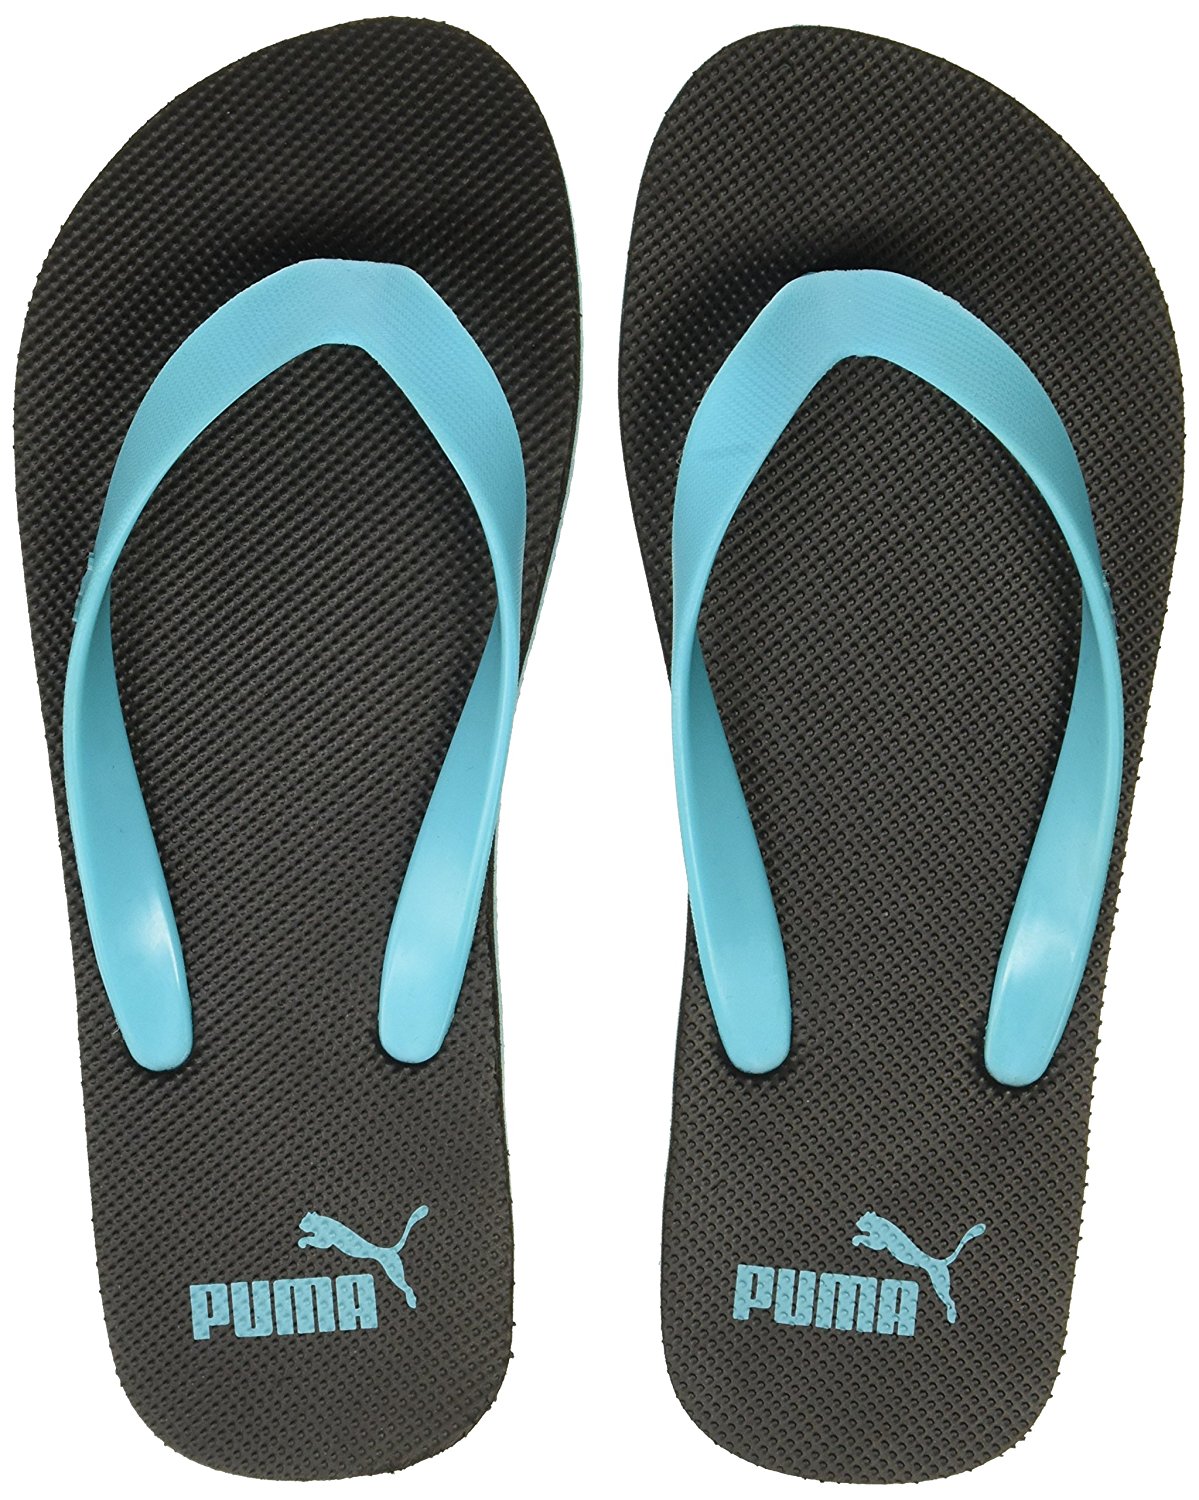 puma slippers amazon